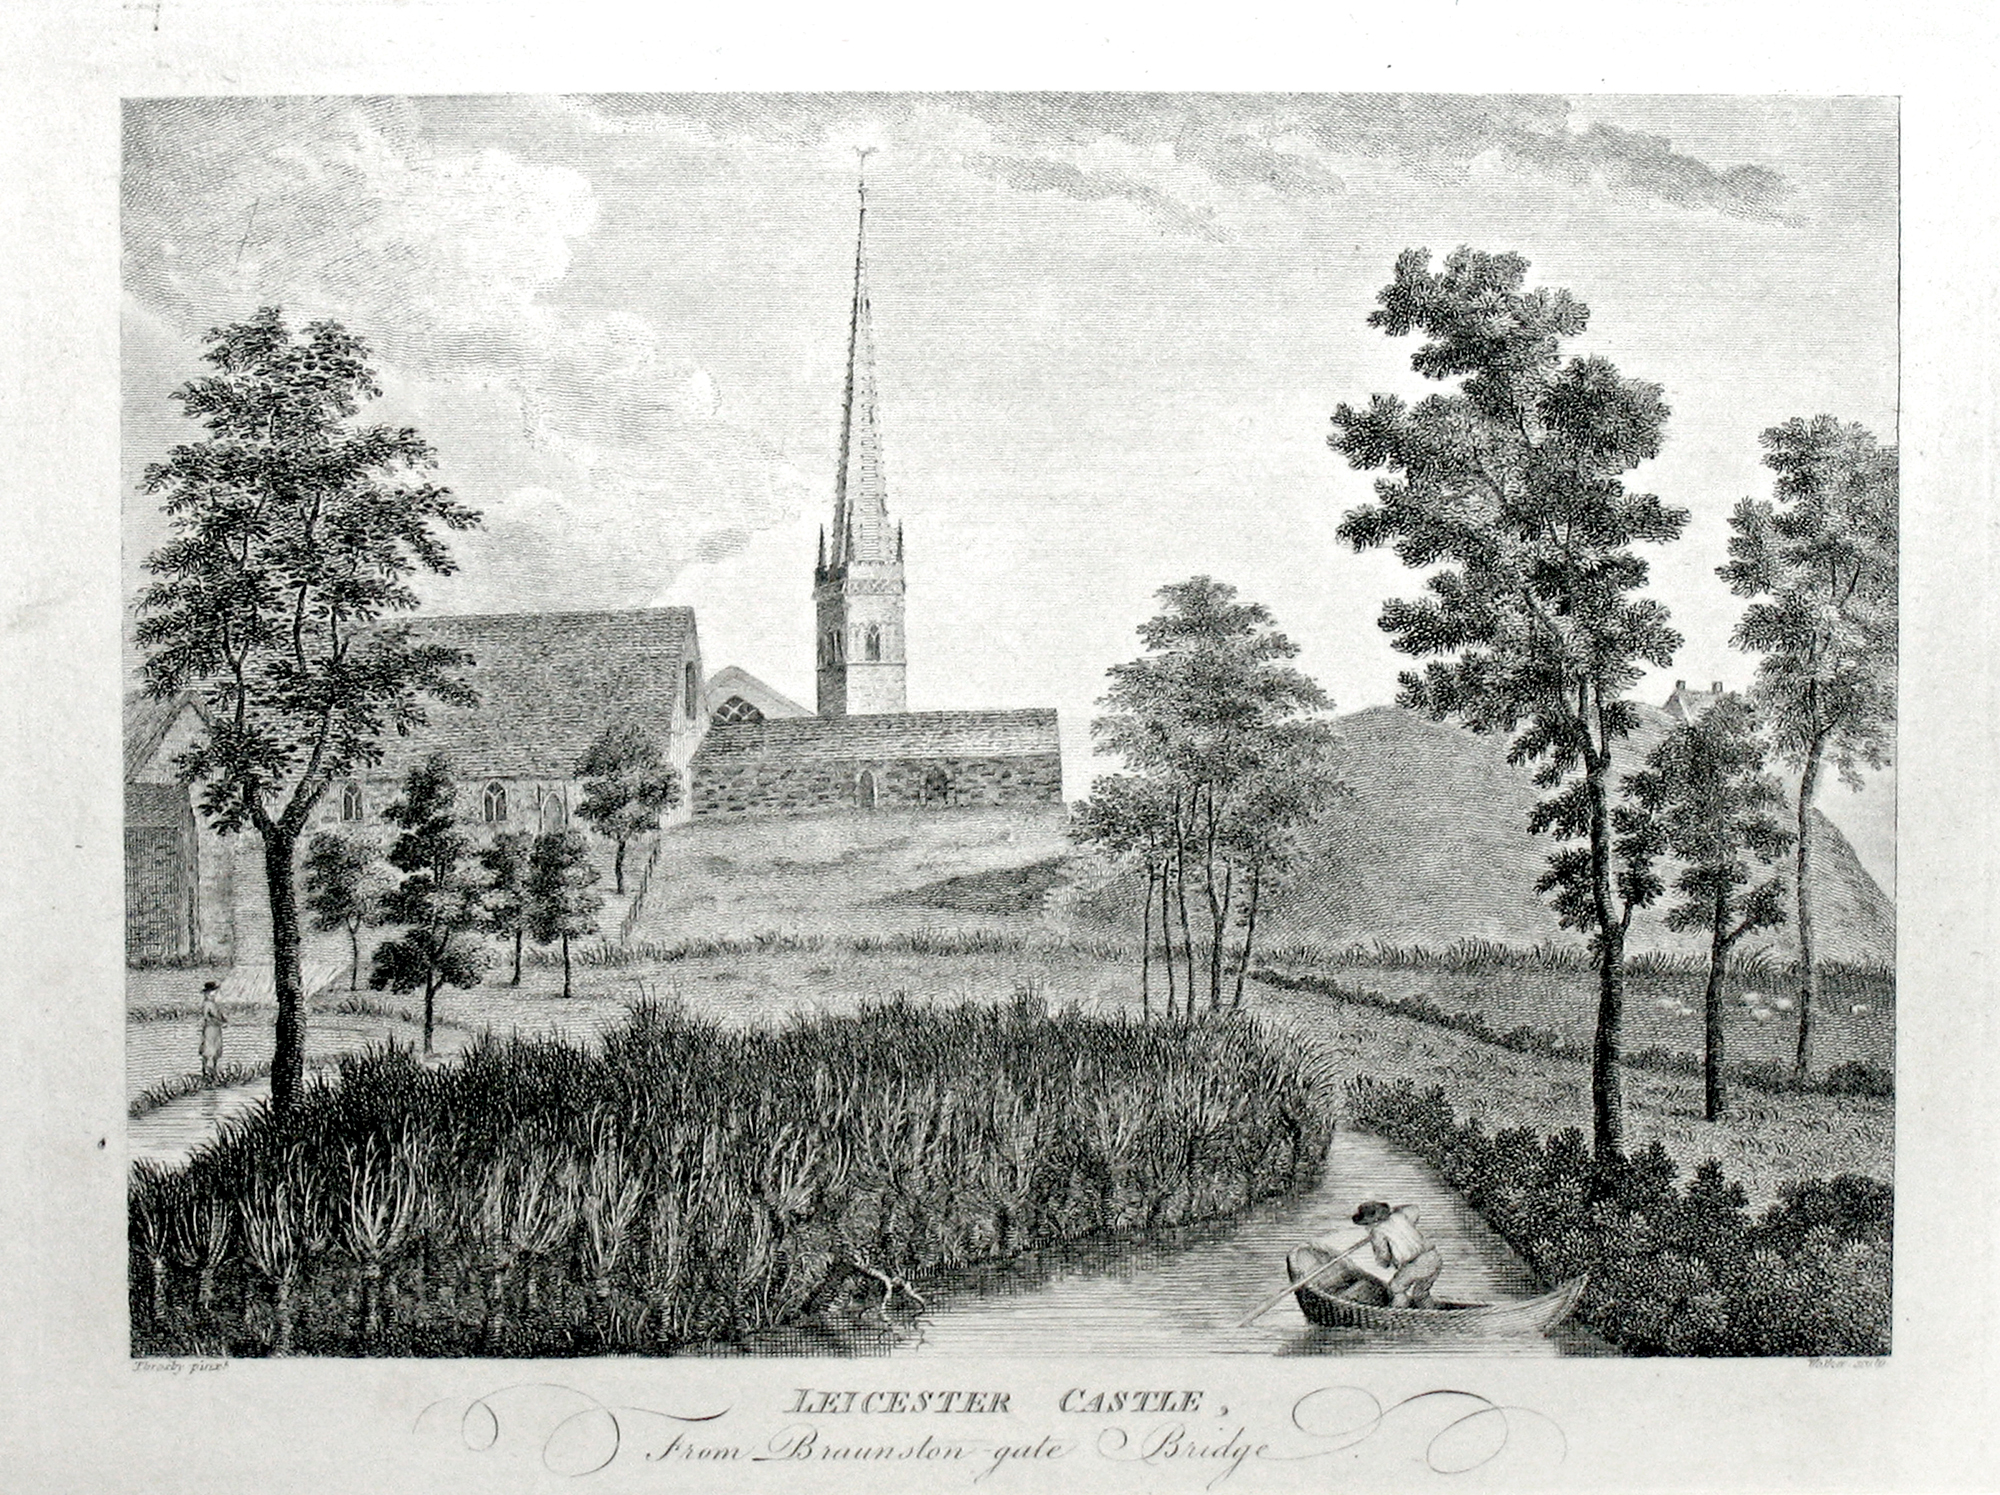 Leicester Castle from Braunstone Gate Bridge, John Throsby, 1791 - 